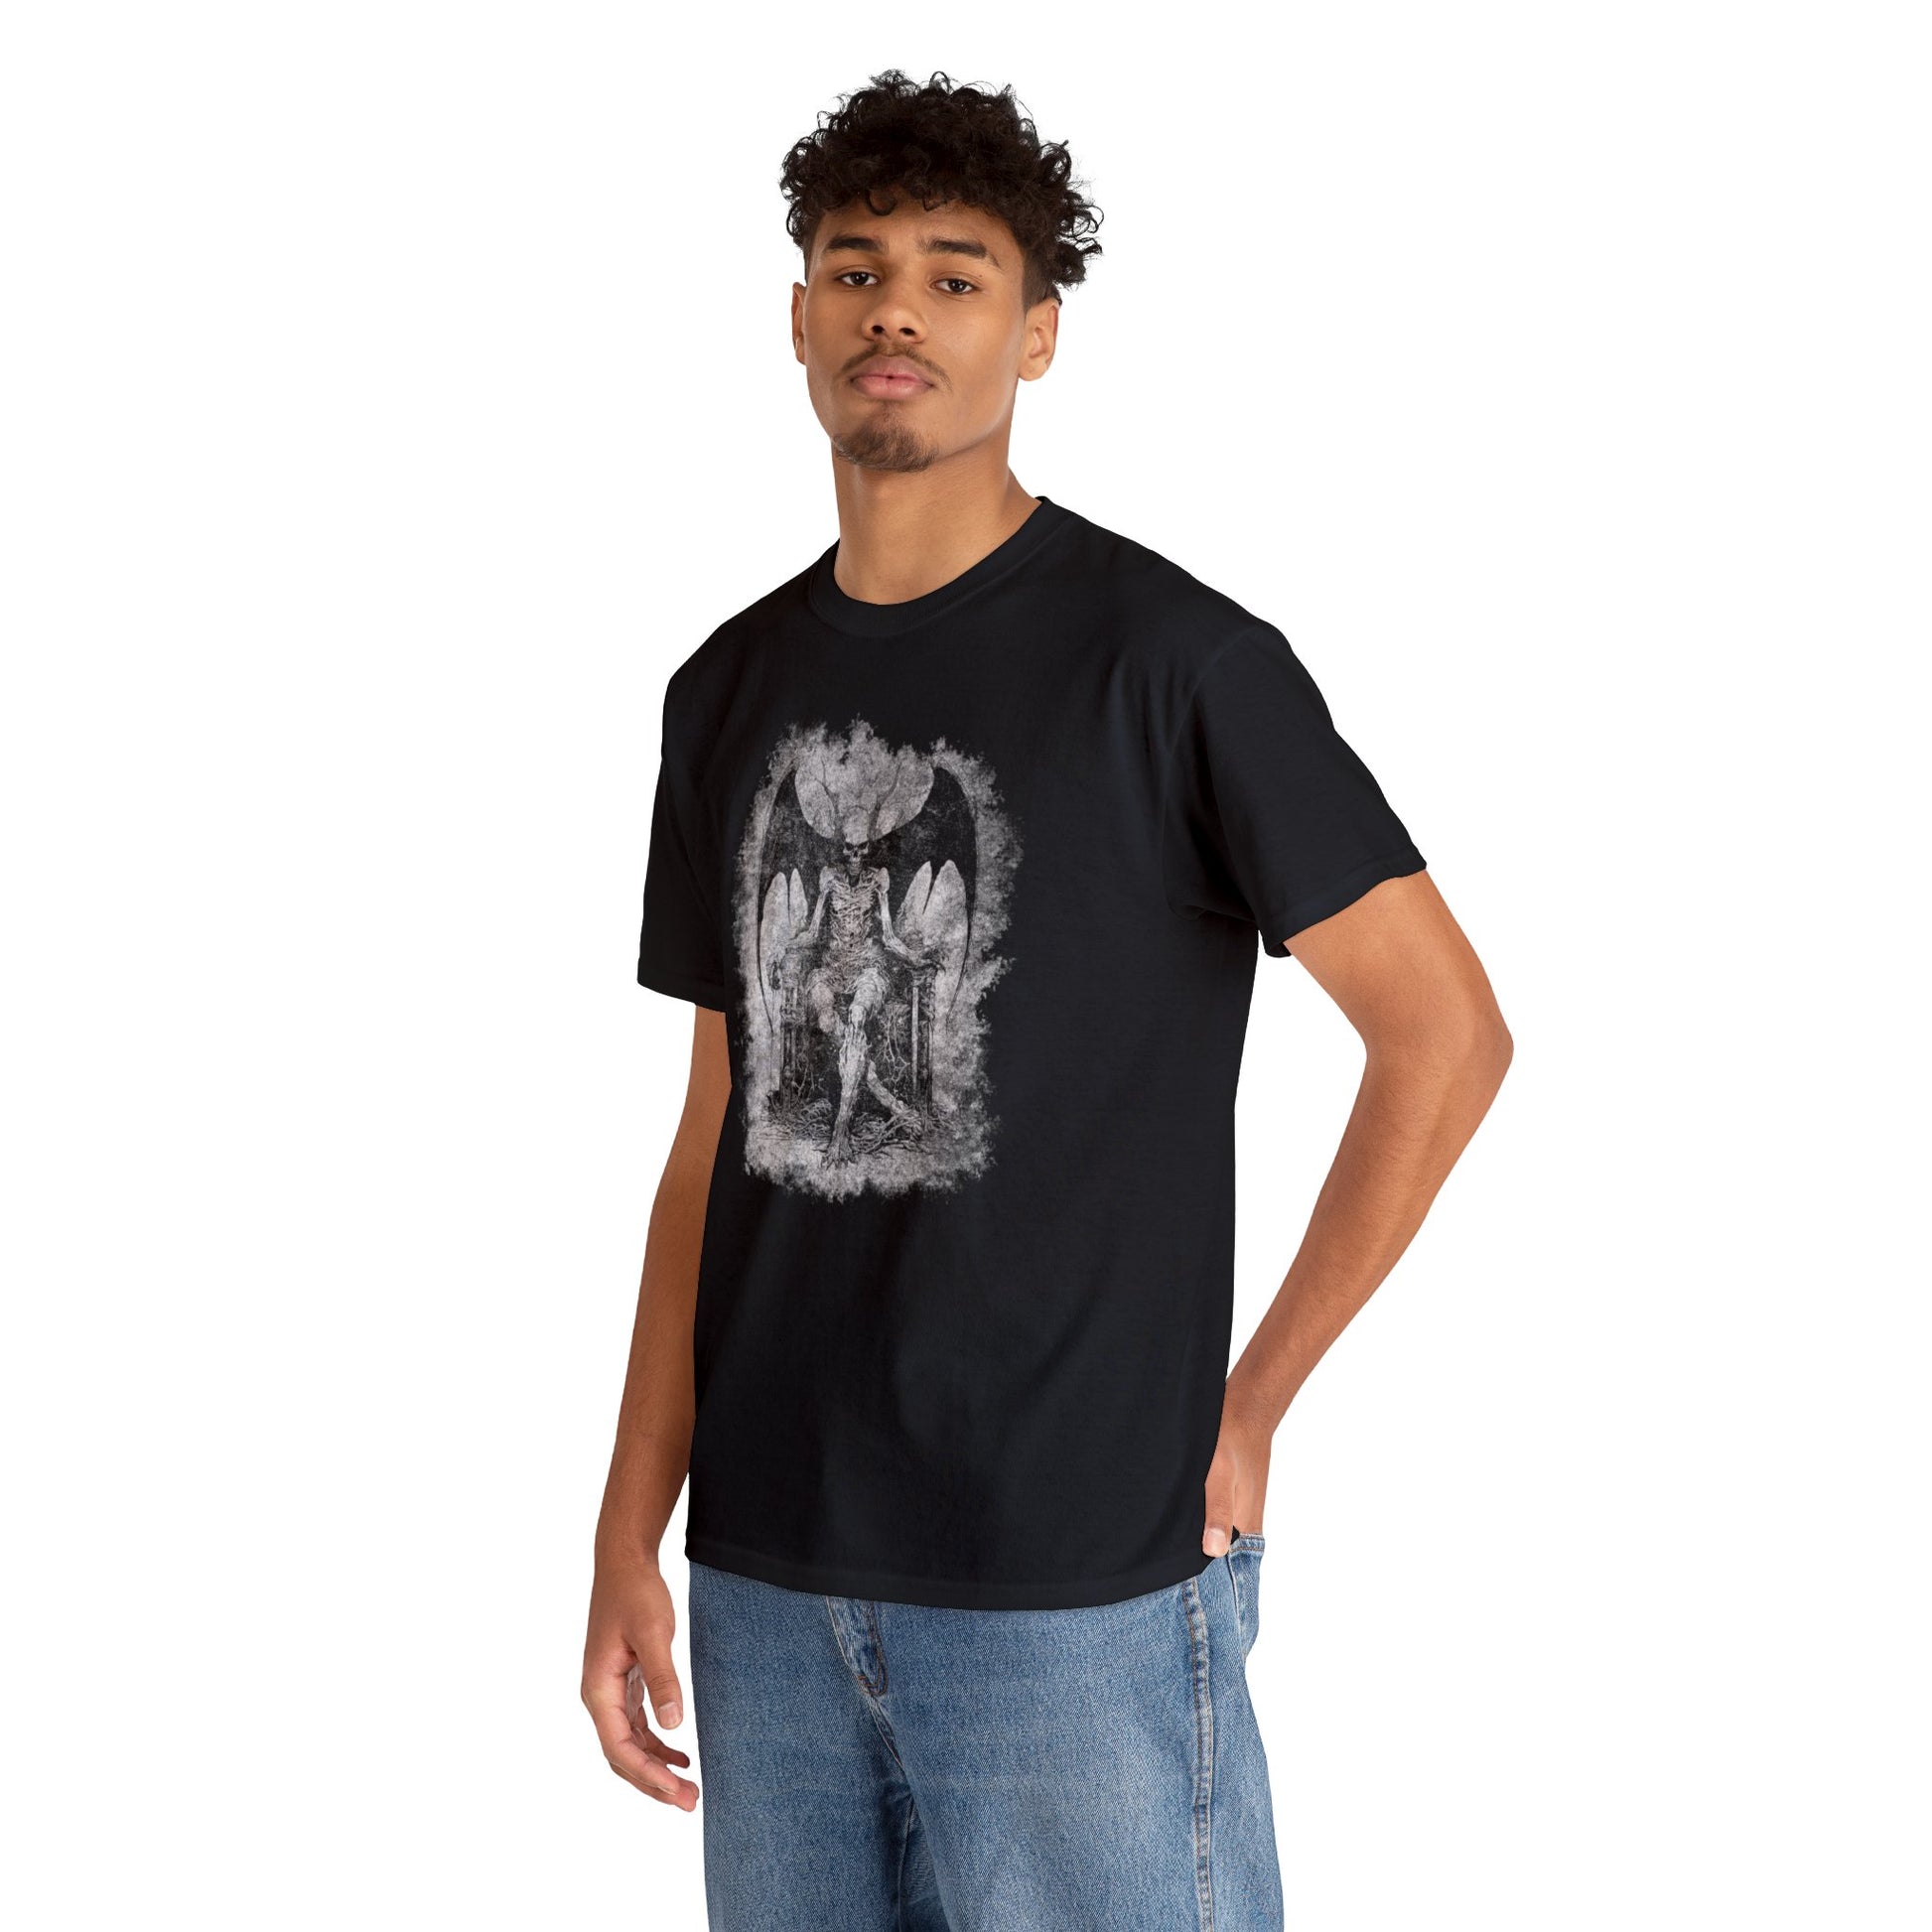 Unisex T-shirt Devil on his Throne in Grey - Frogos Design